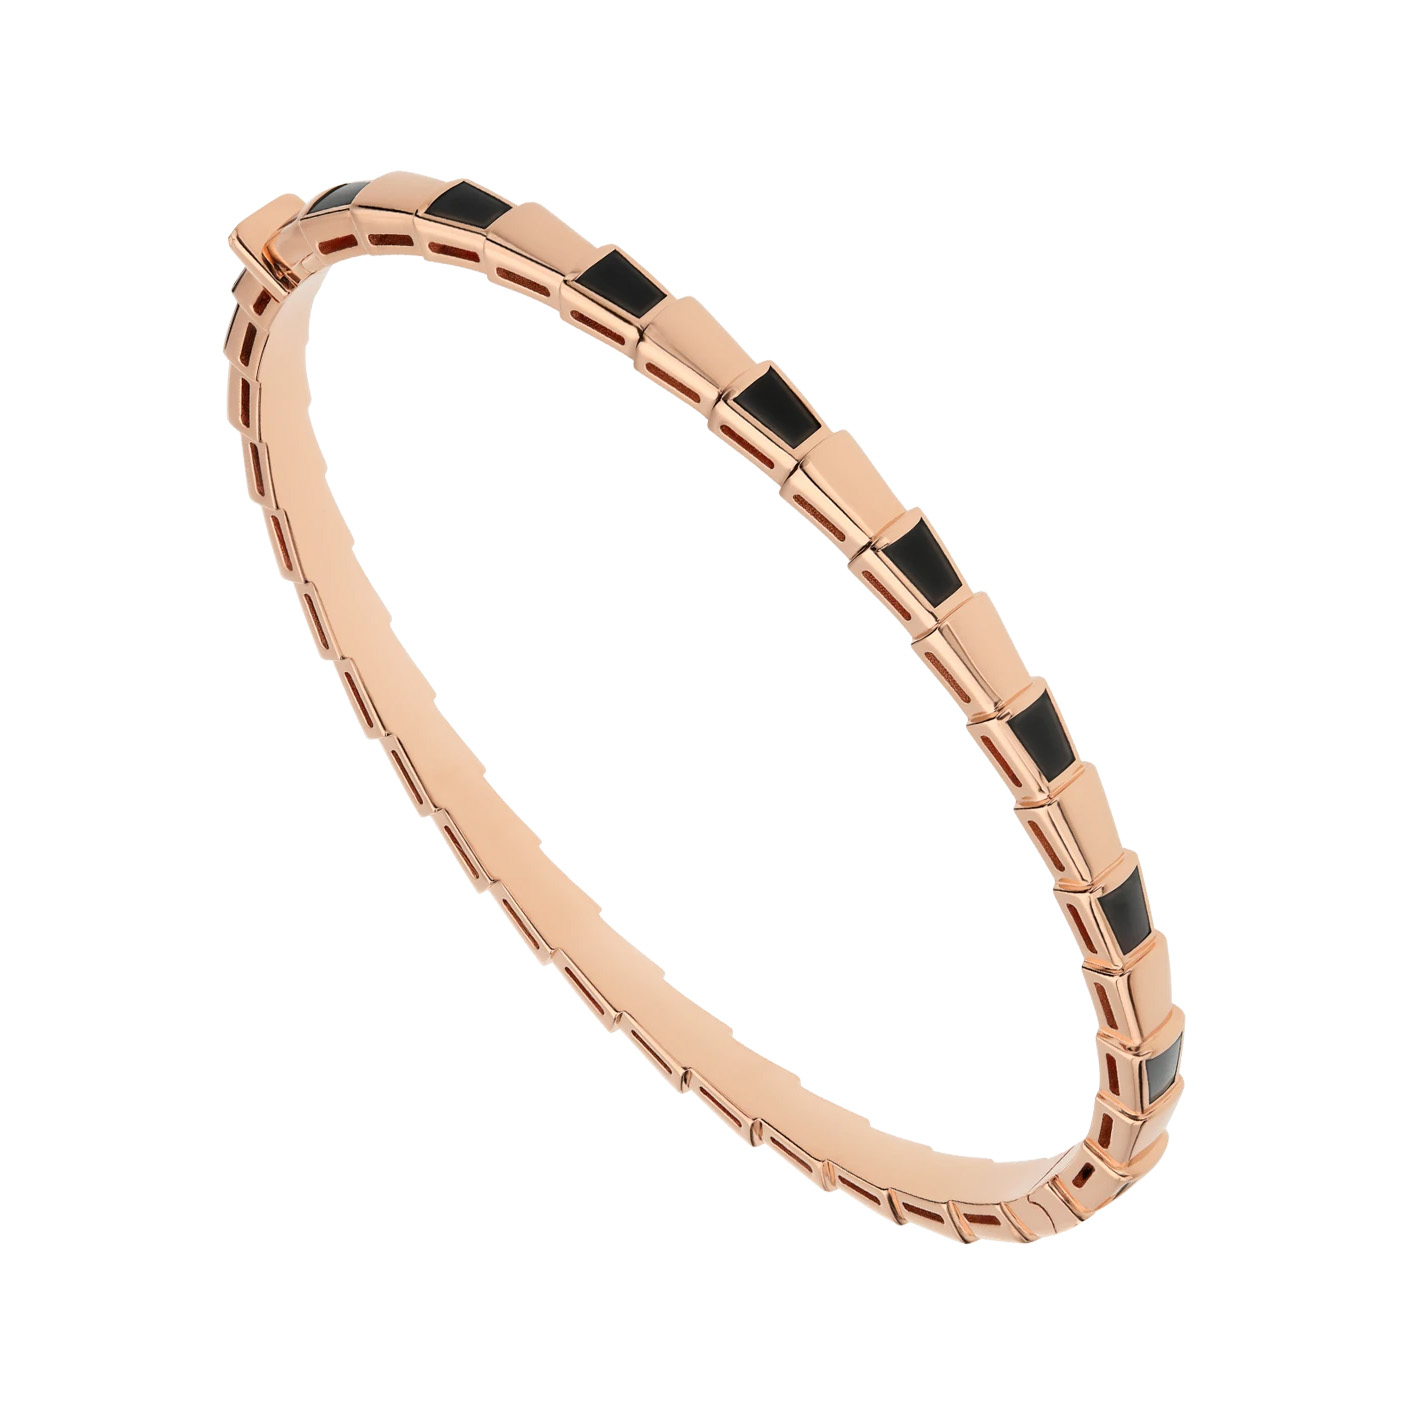 Wholesale OEM made OEM/ODM Jewelry design 18K rose gold thin bangle bracelet set with onyx elements custom jewelry manufacturers china